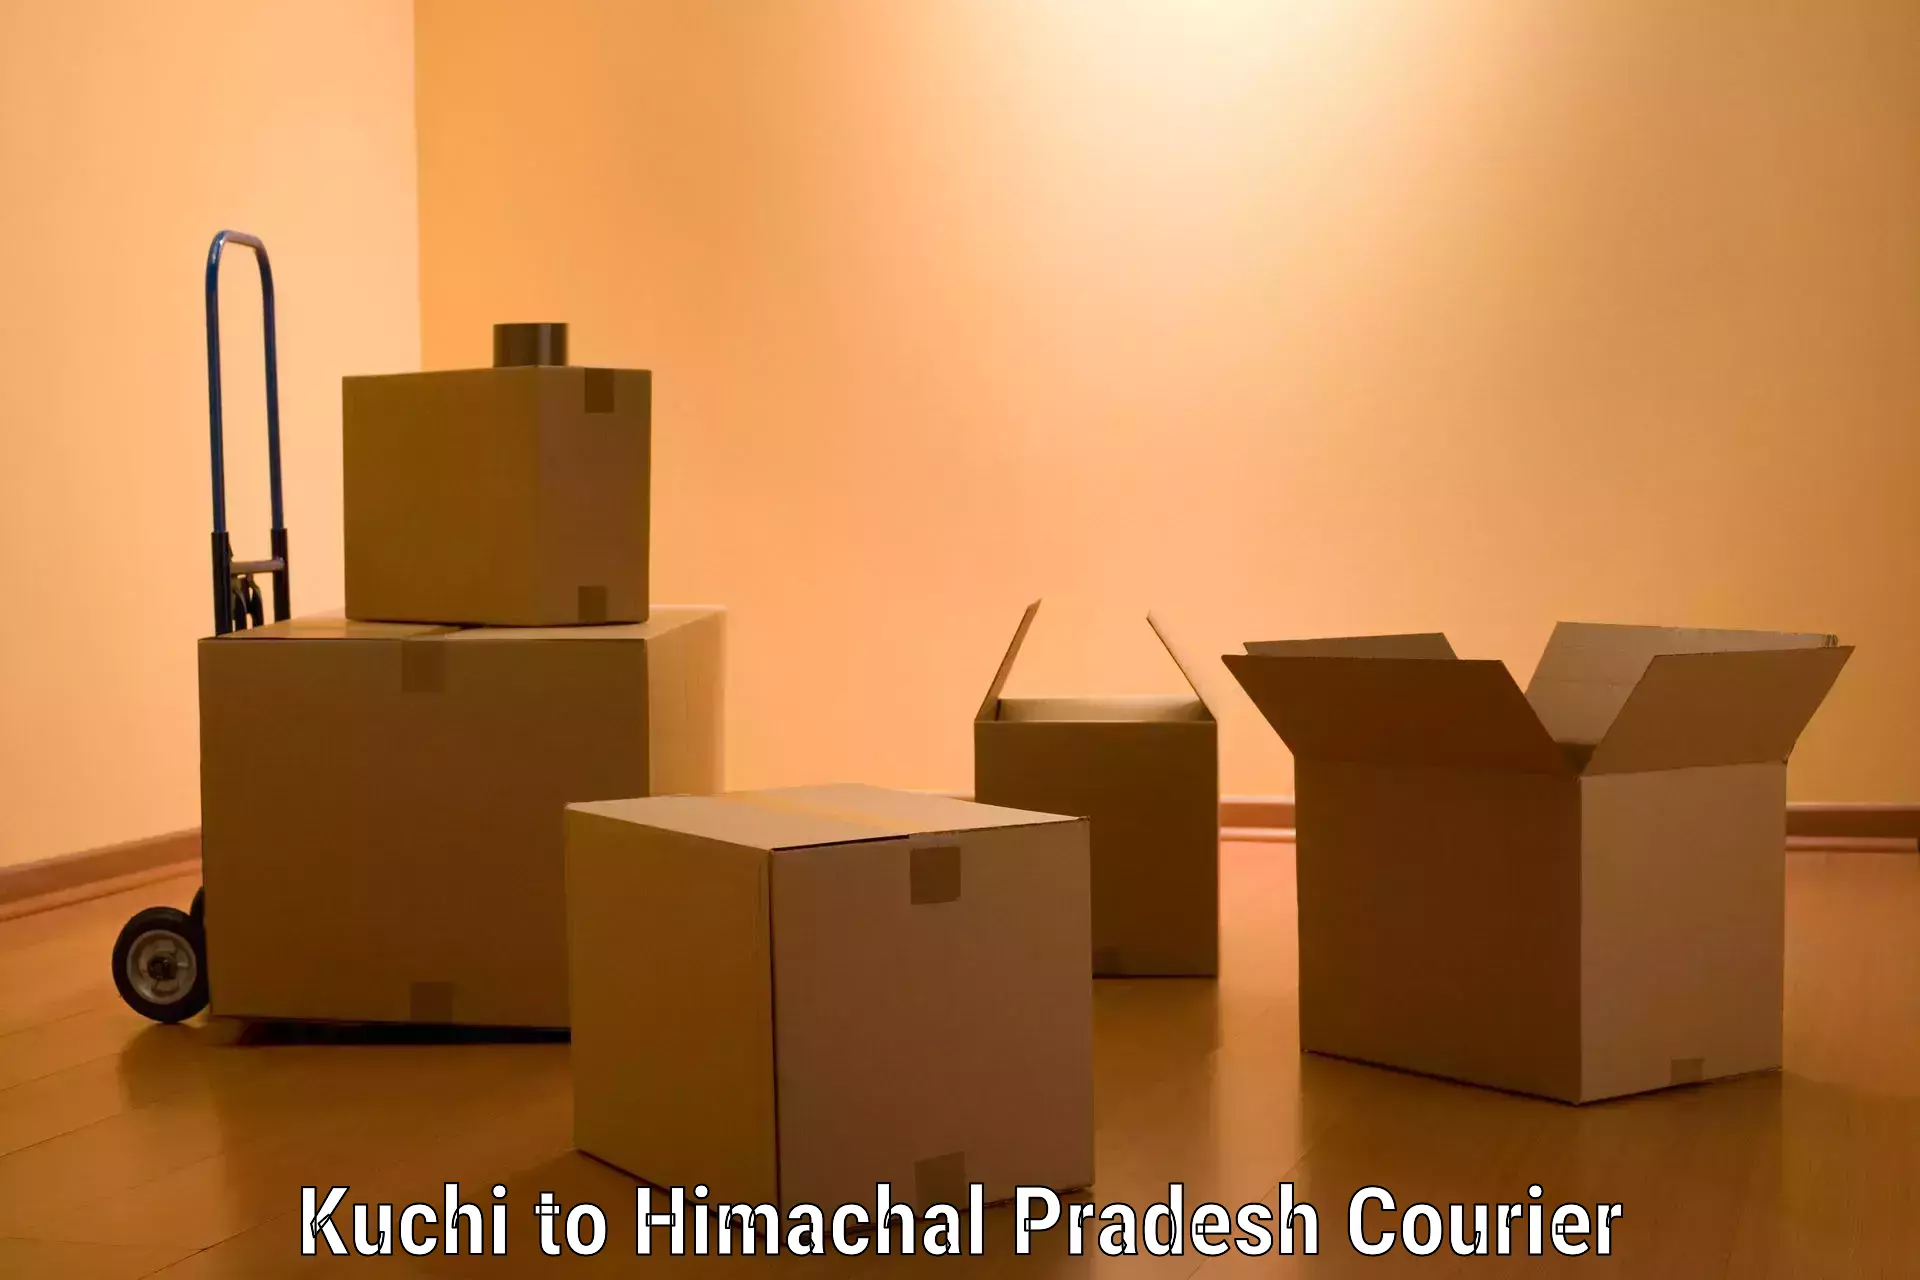 Furniture delivery service Kuchi to Himachal Pradesh